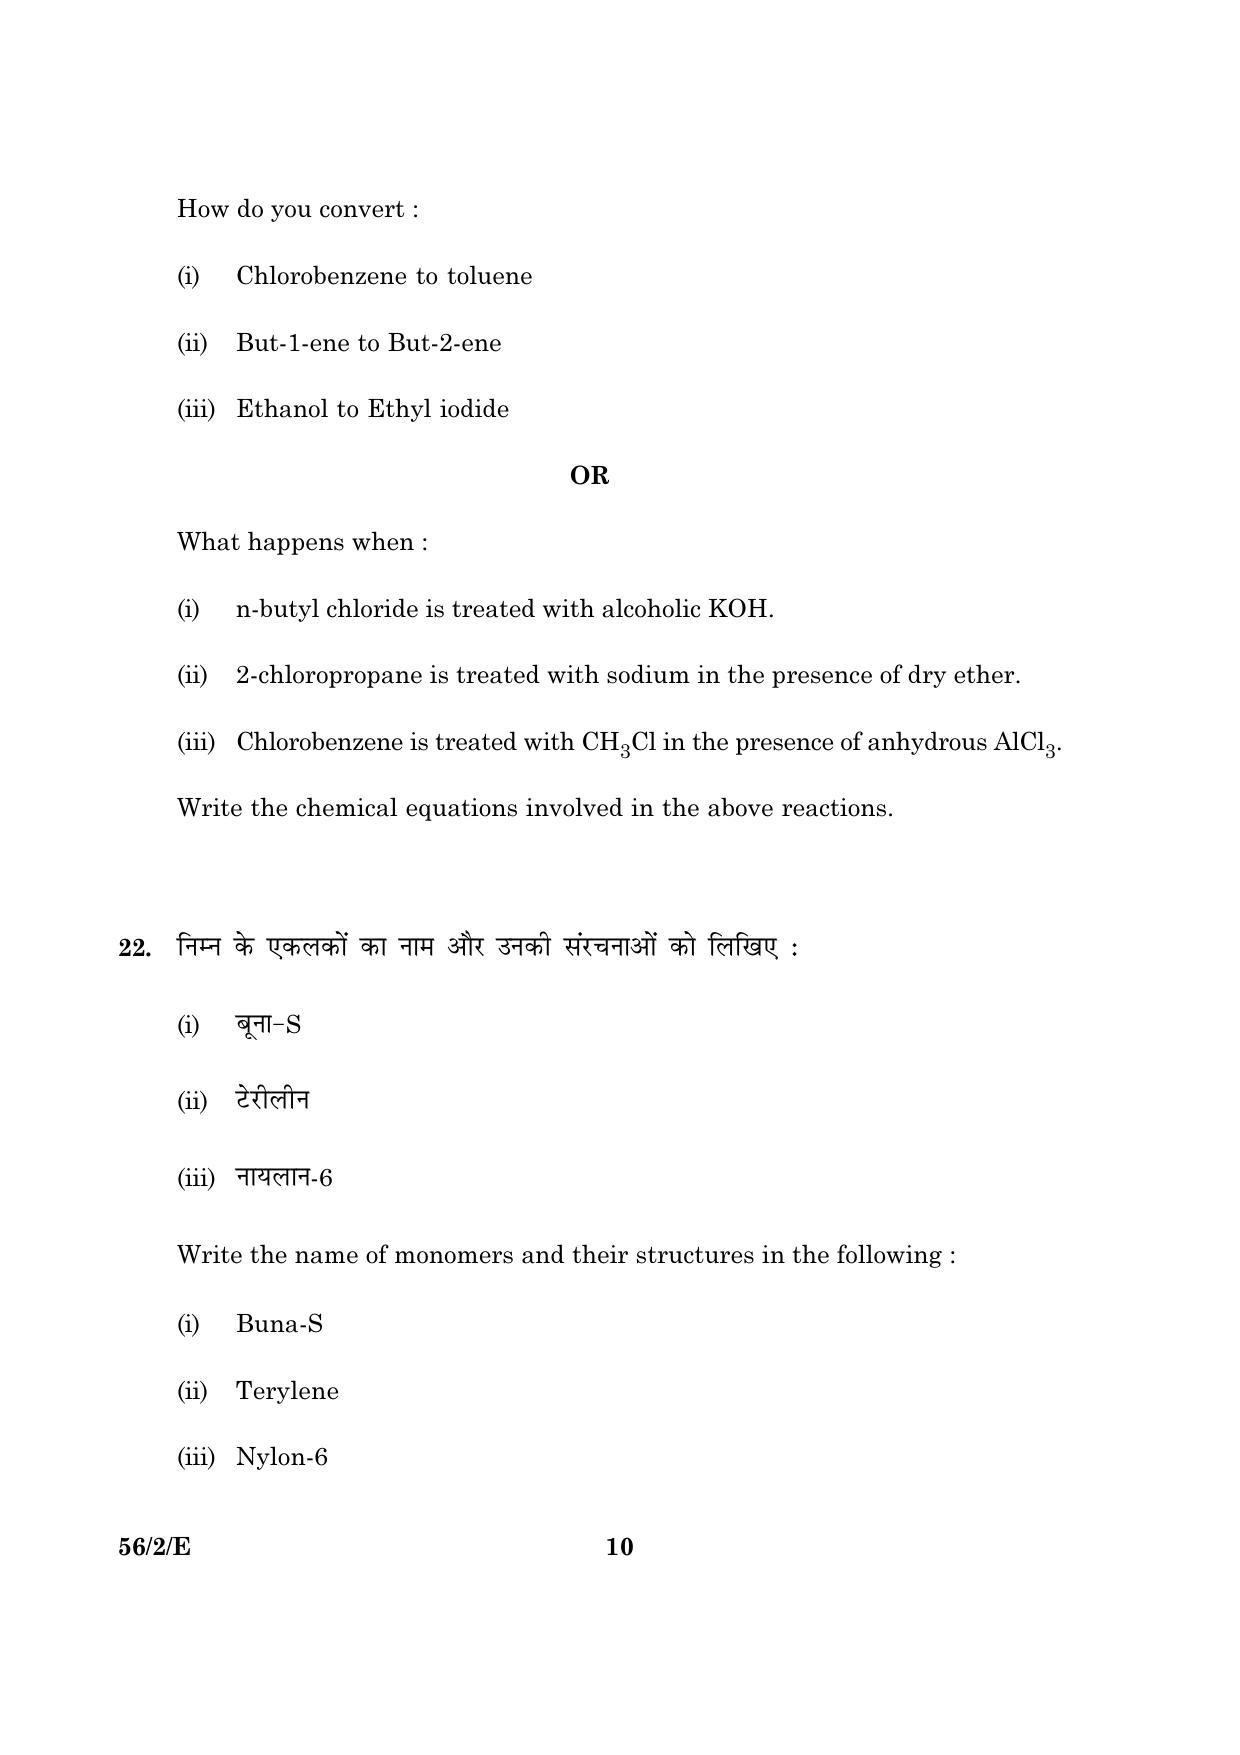 CBSE Class 12 056 Set 2 E Chemistry 2016 Question Paper - Page 10